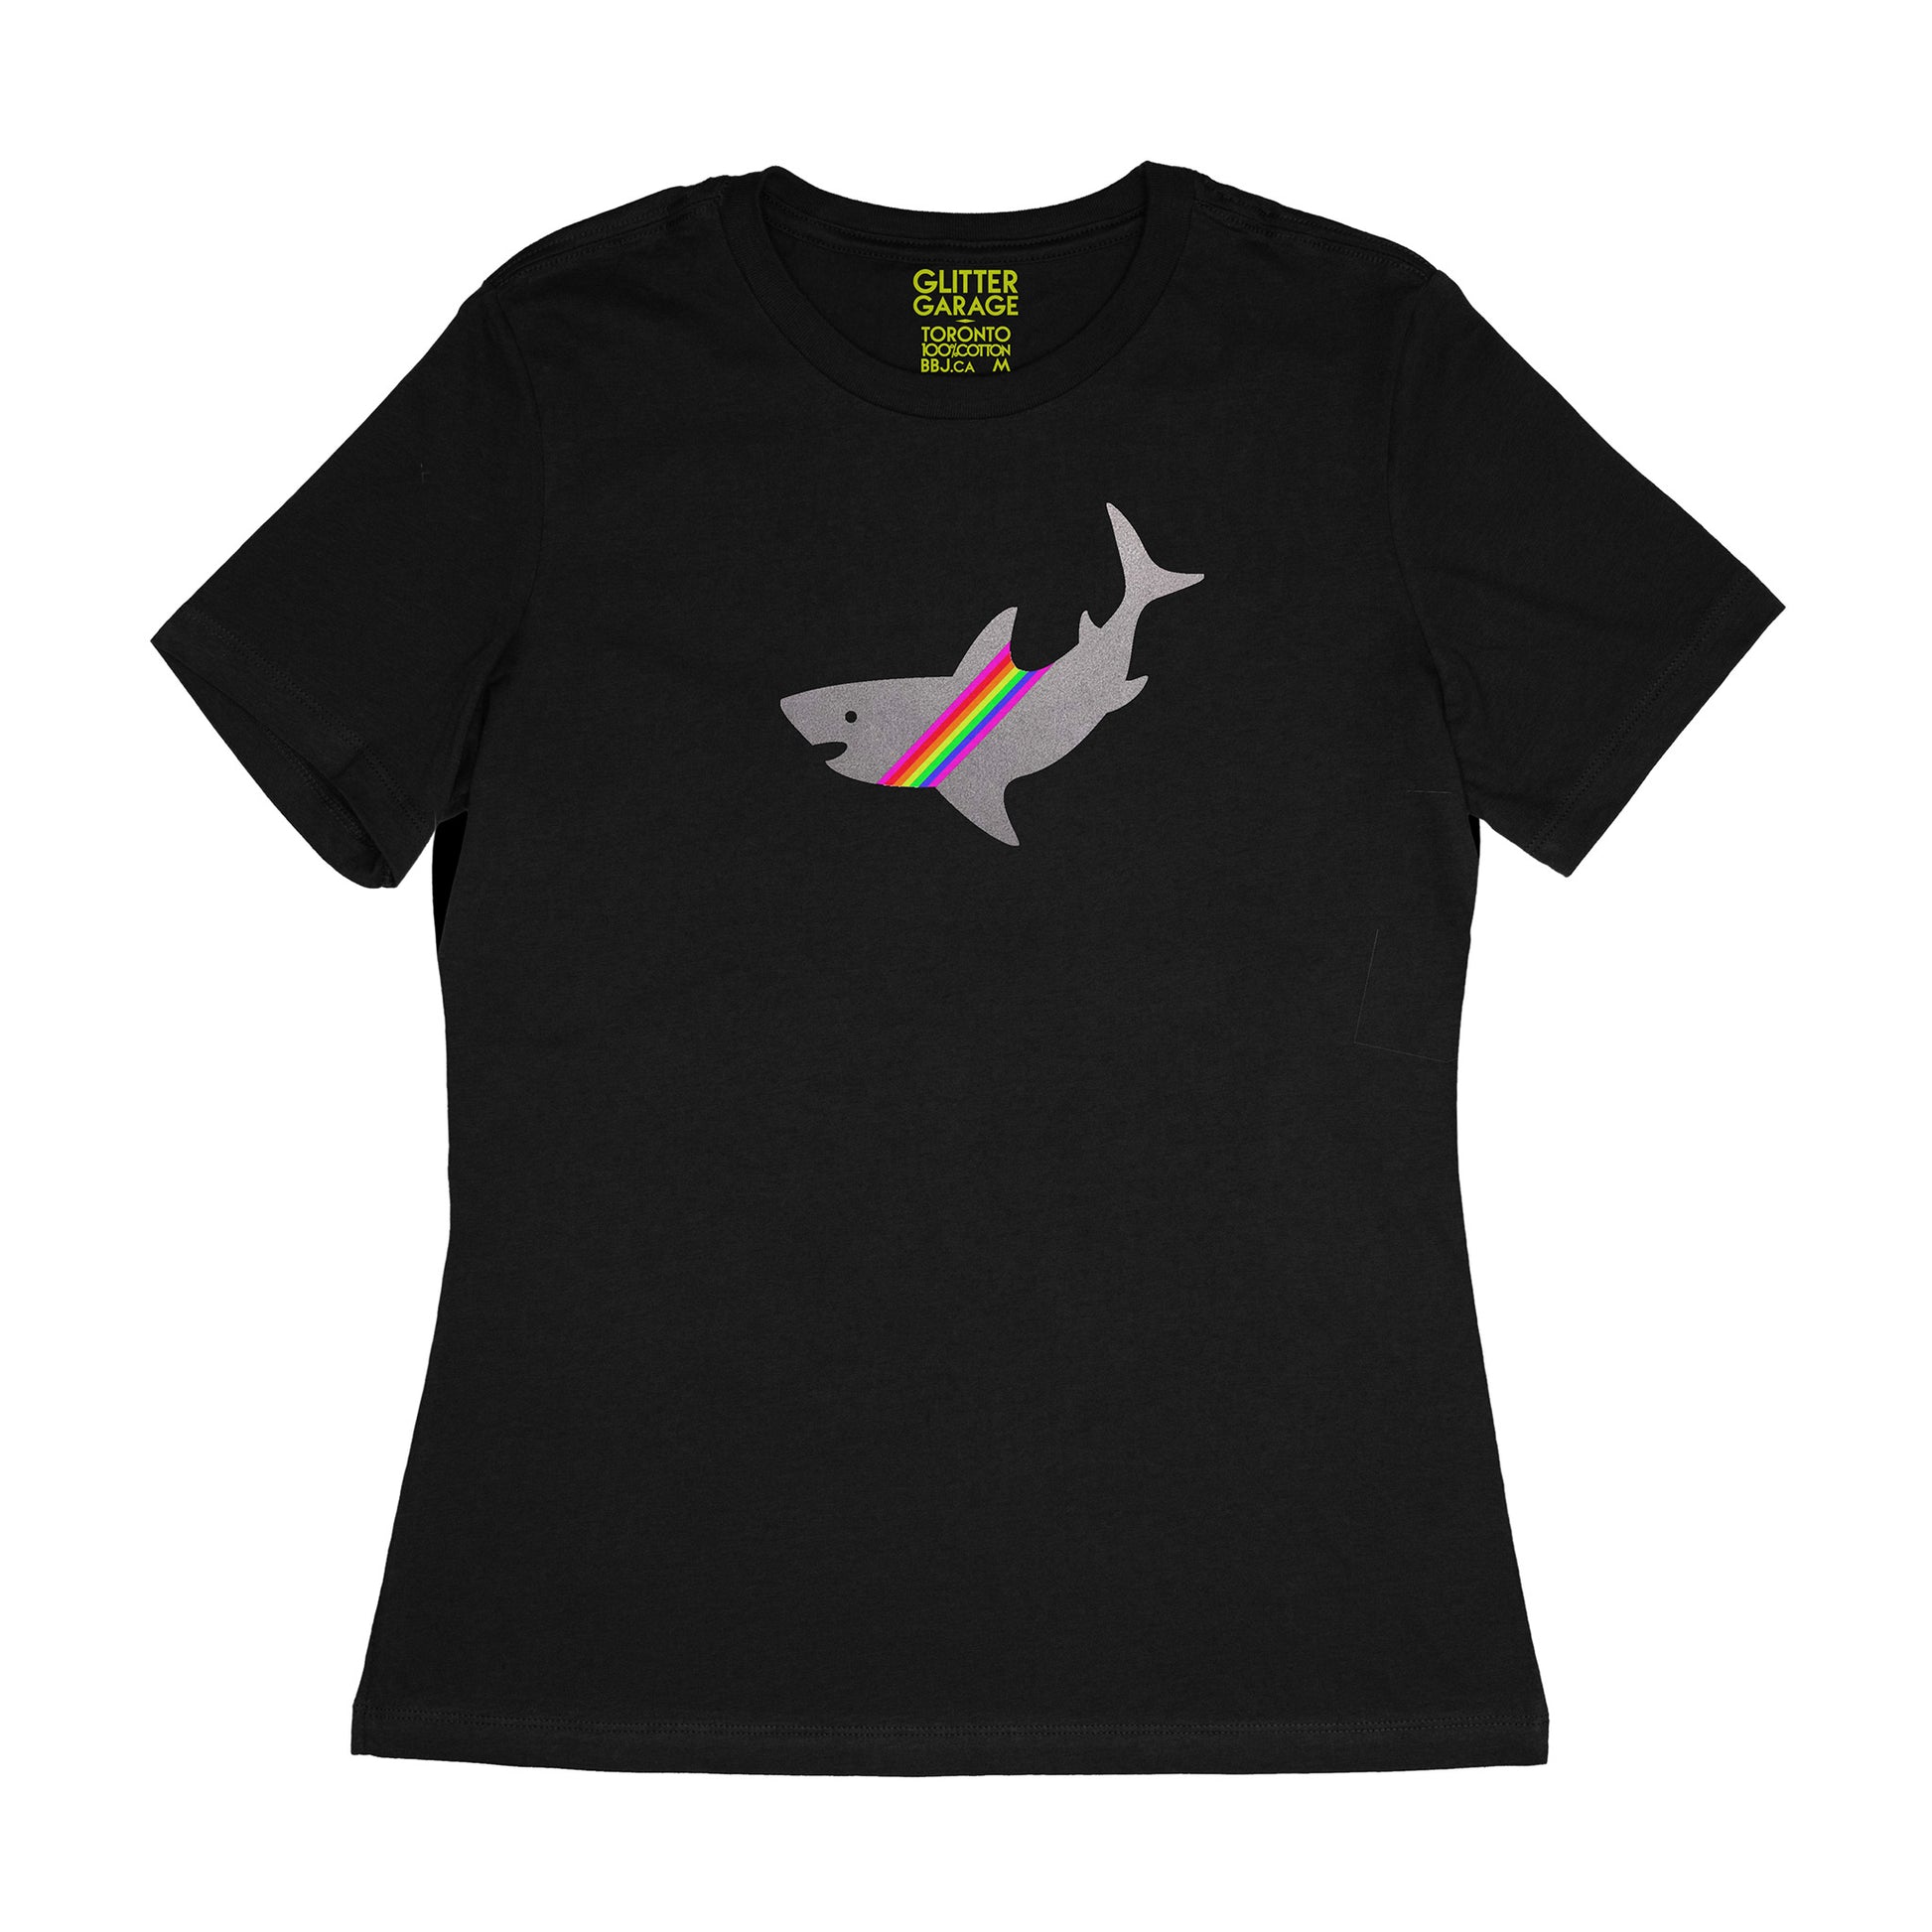 fuzzy grey shark with neon rainbow stripe on black women's relaxed fit tee by BBJ / Glitter Garage